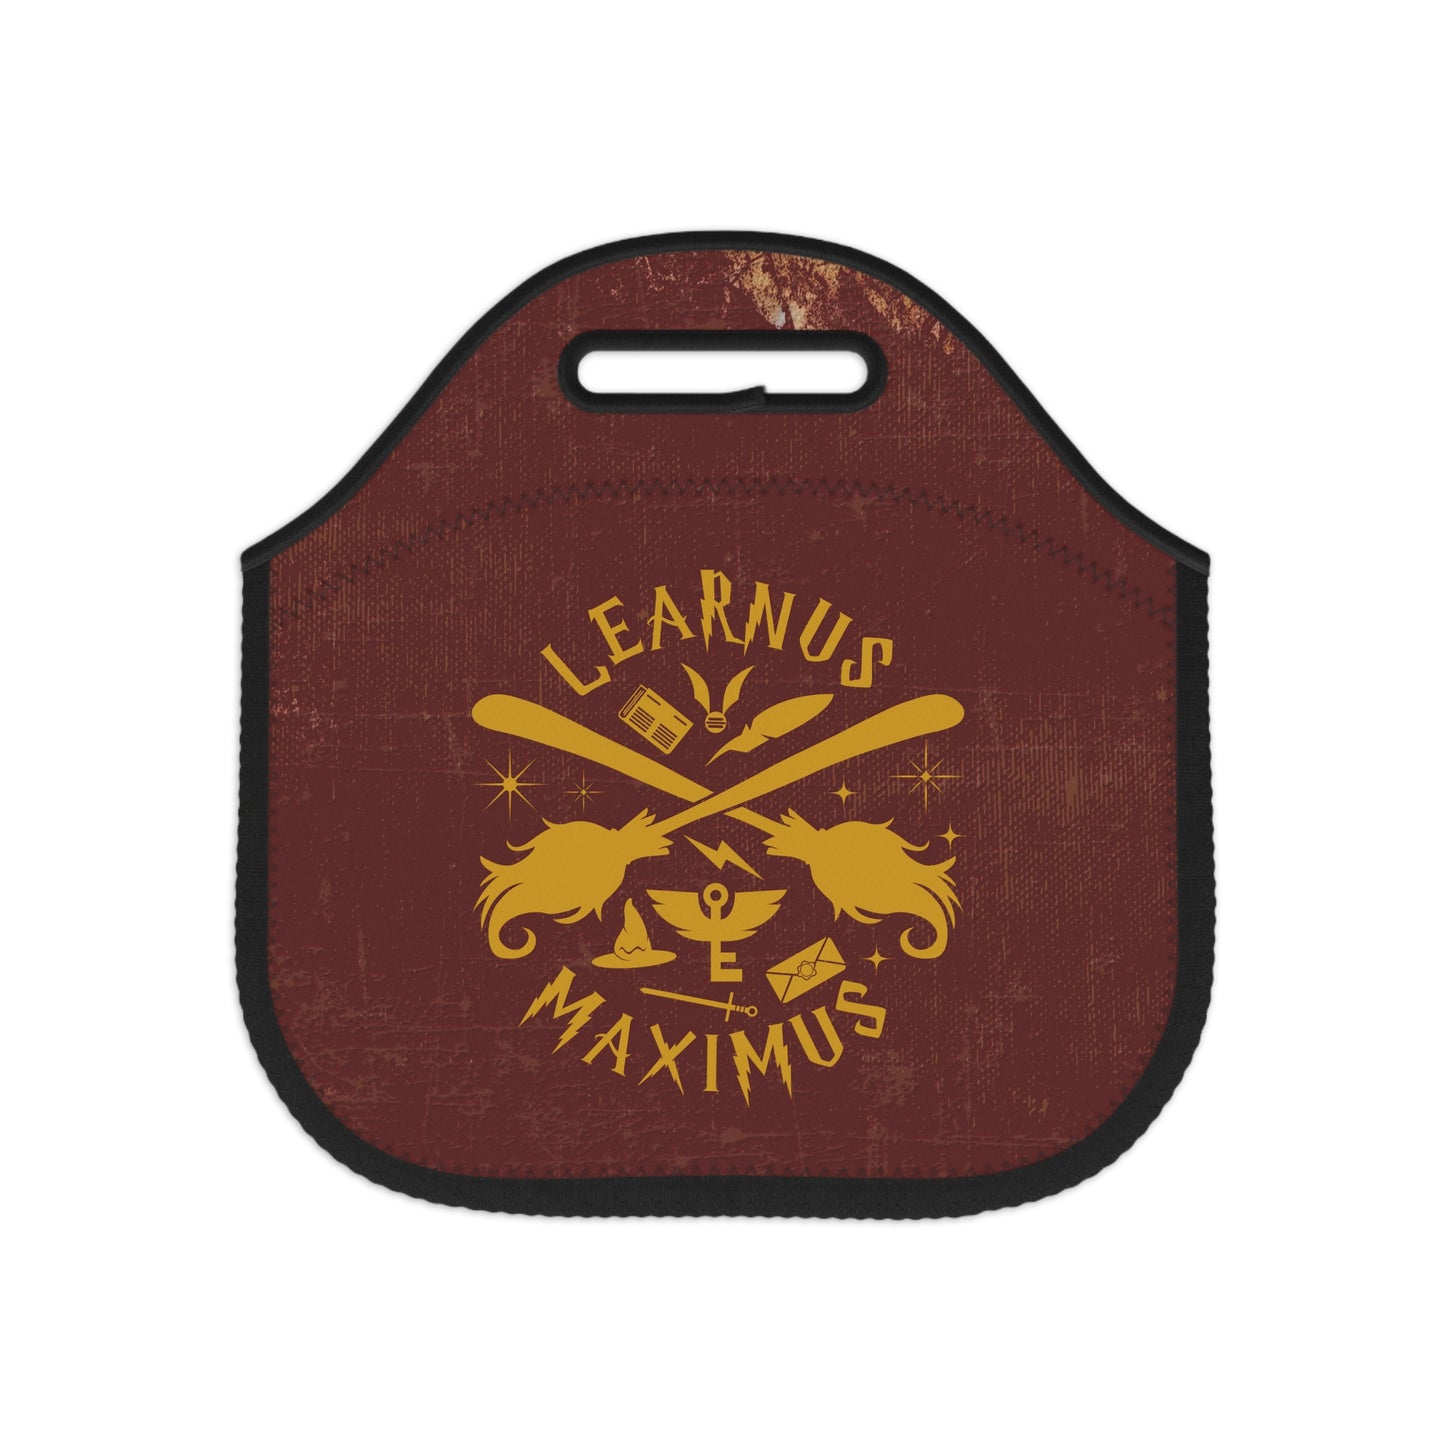 Learnus Maximus Neoprene Lunch Bag